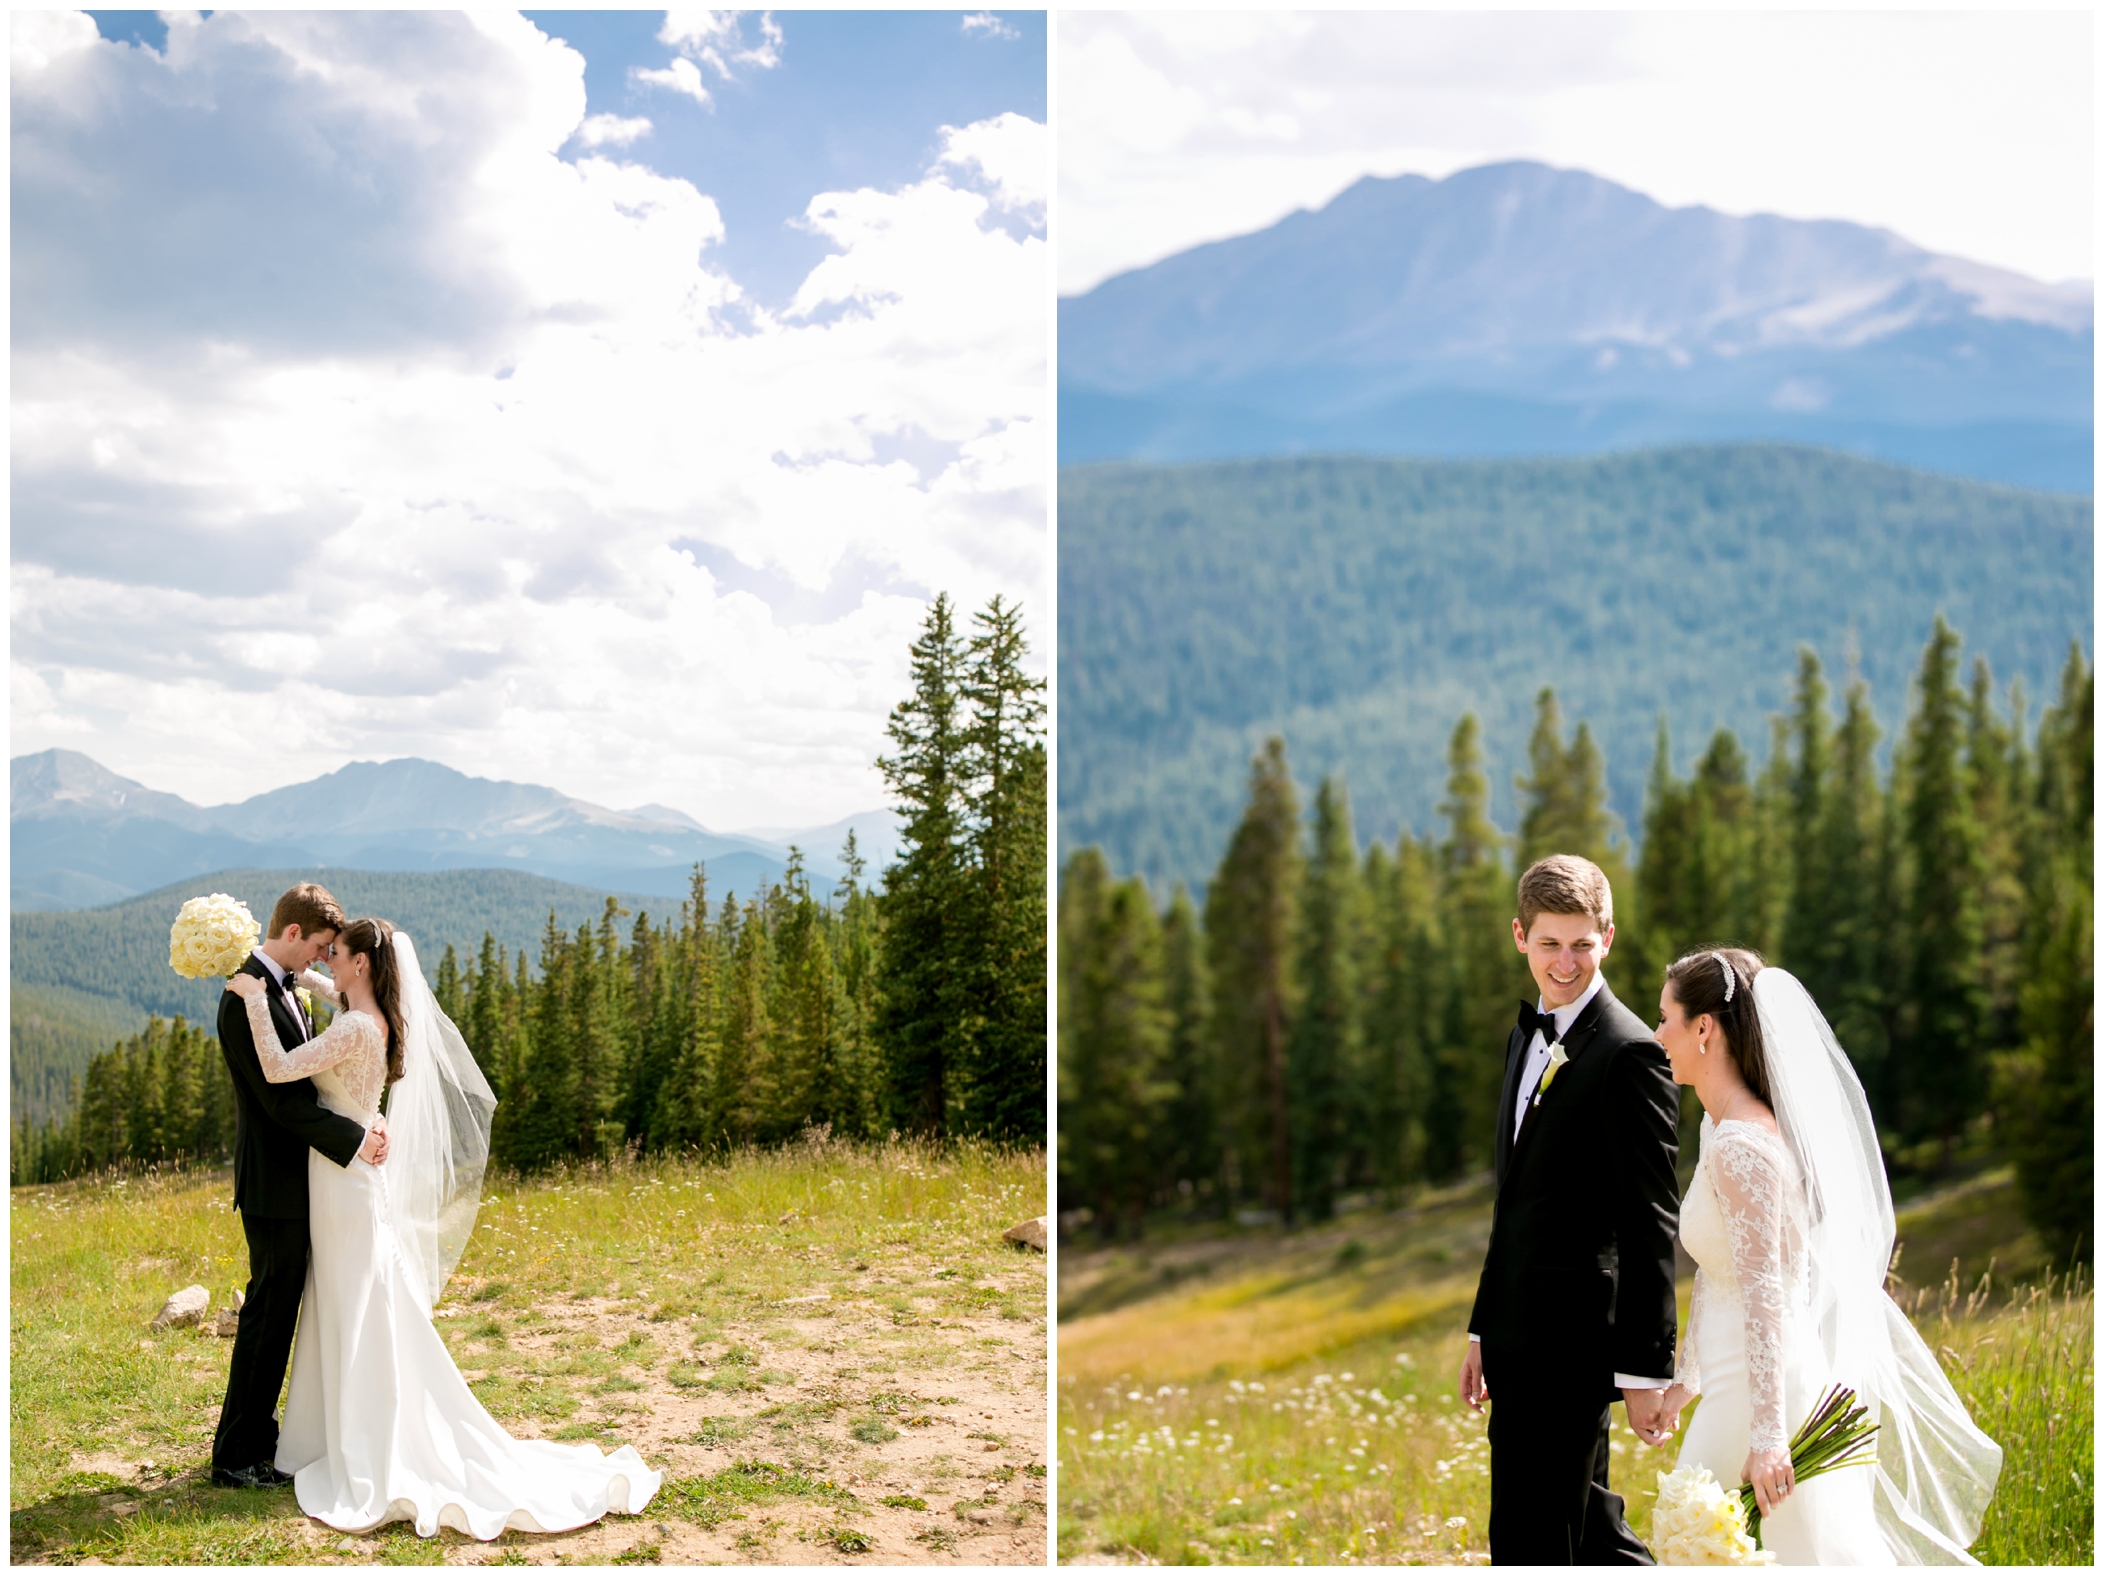 Keystone Colorado wedding photography at Timber Ridge Lodge